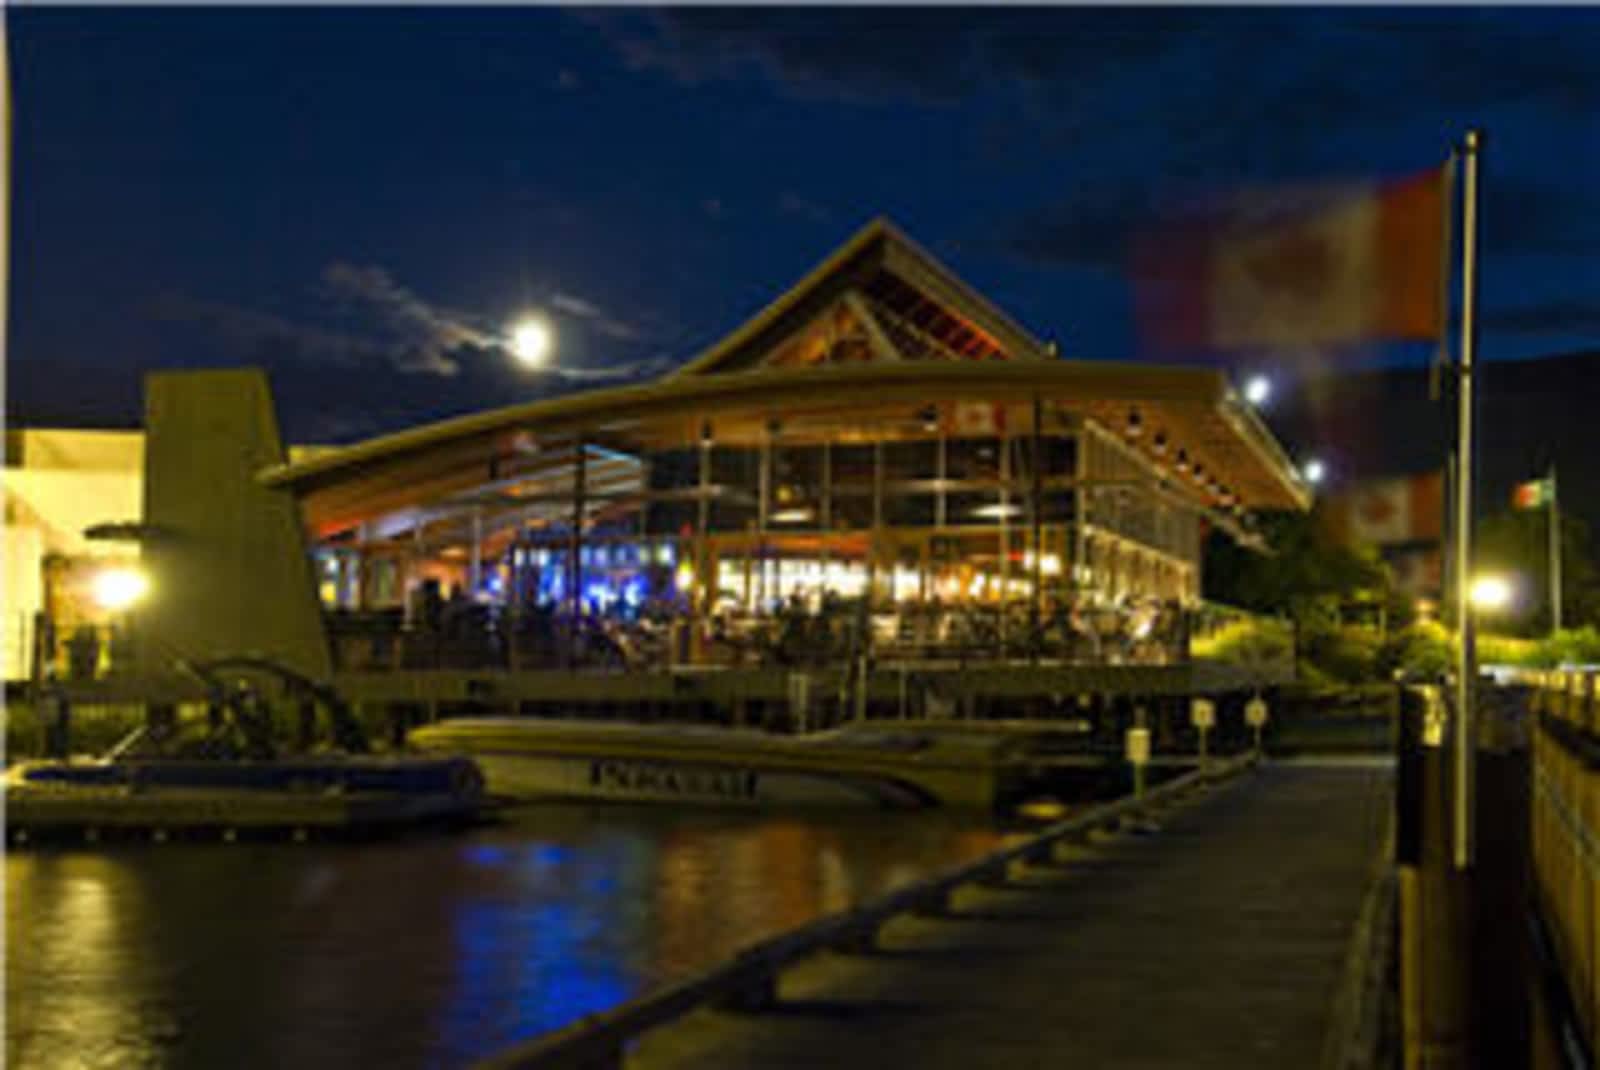 Lakeside Resort & Casino Penticton Bc